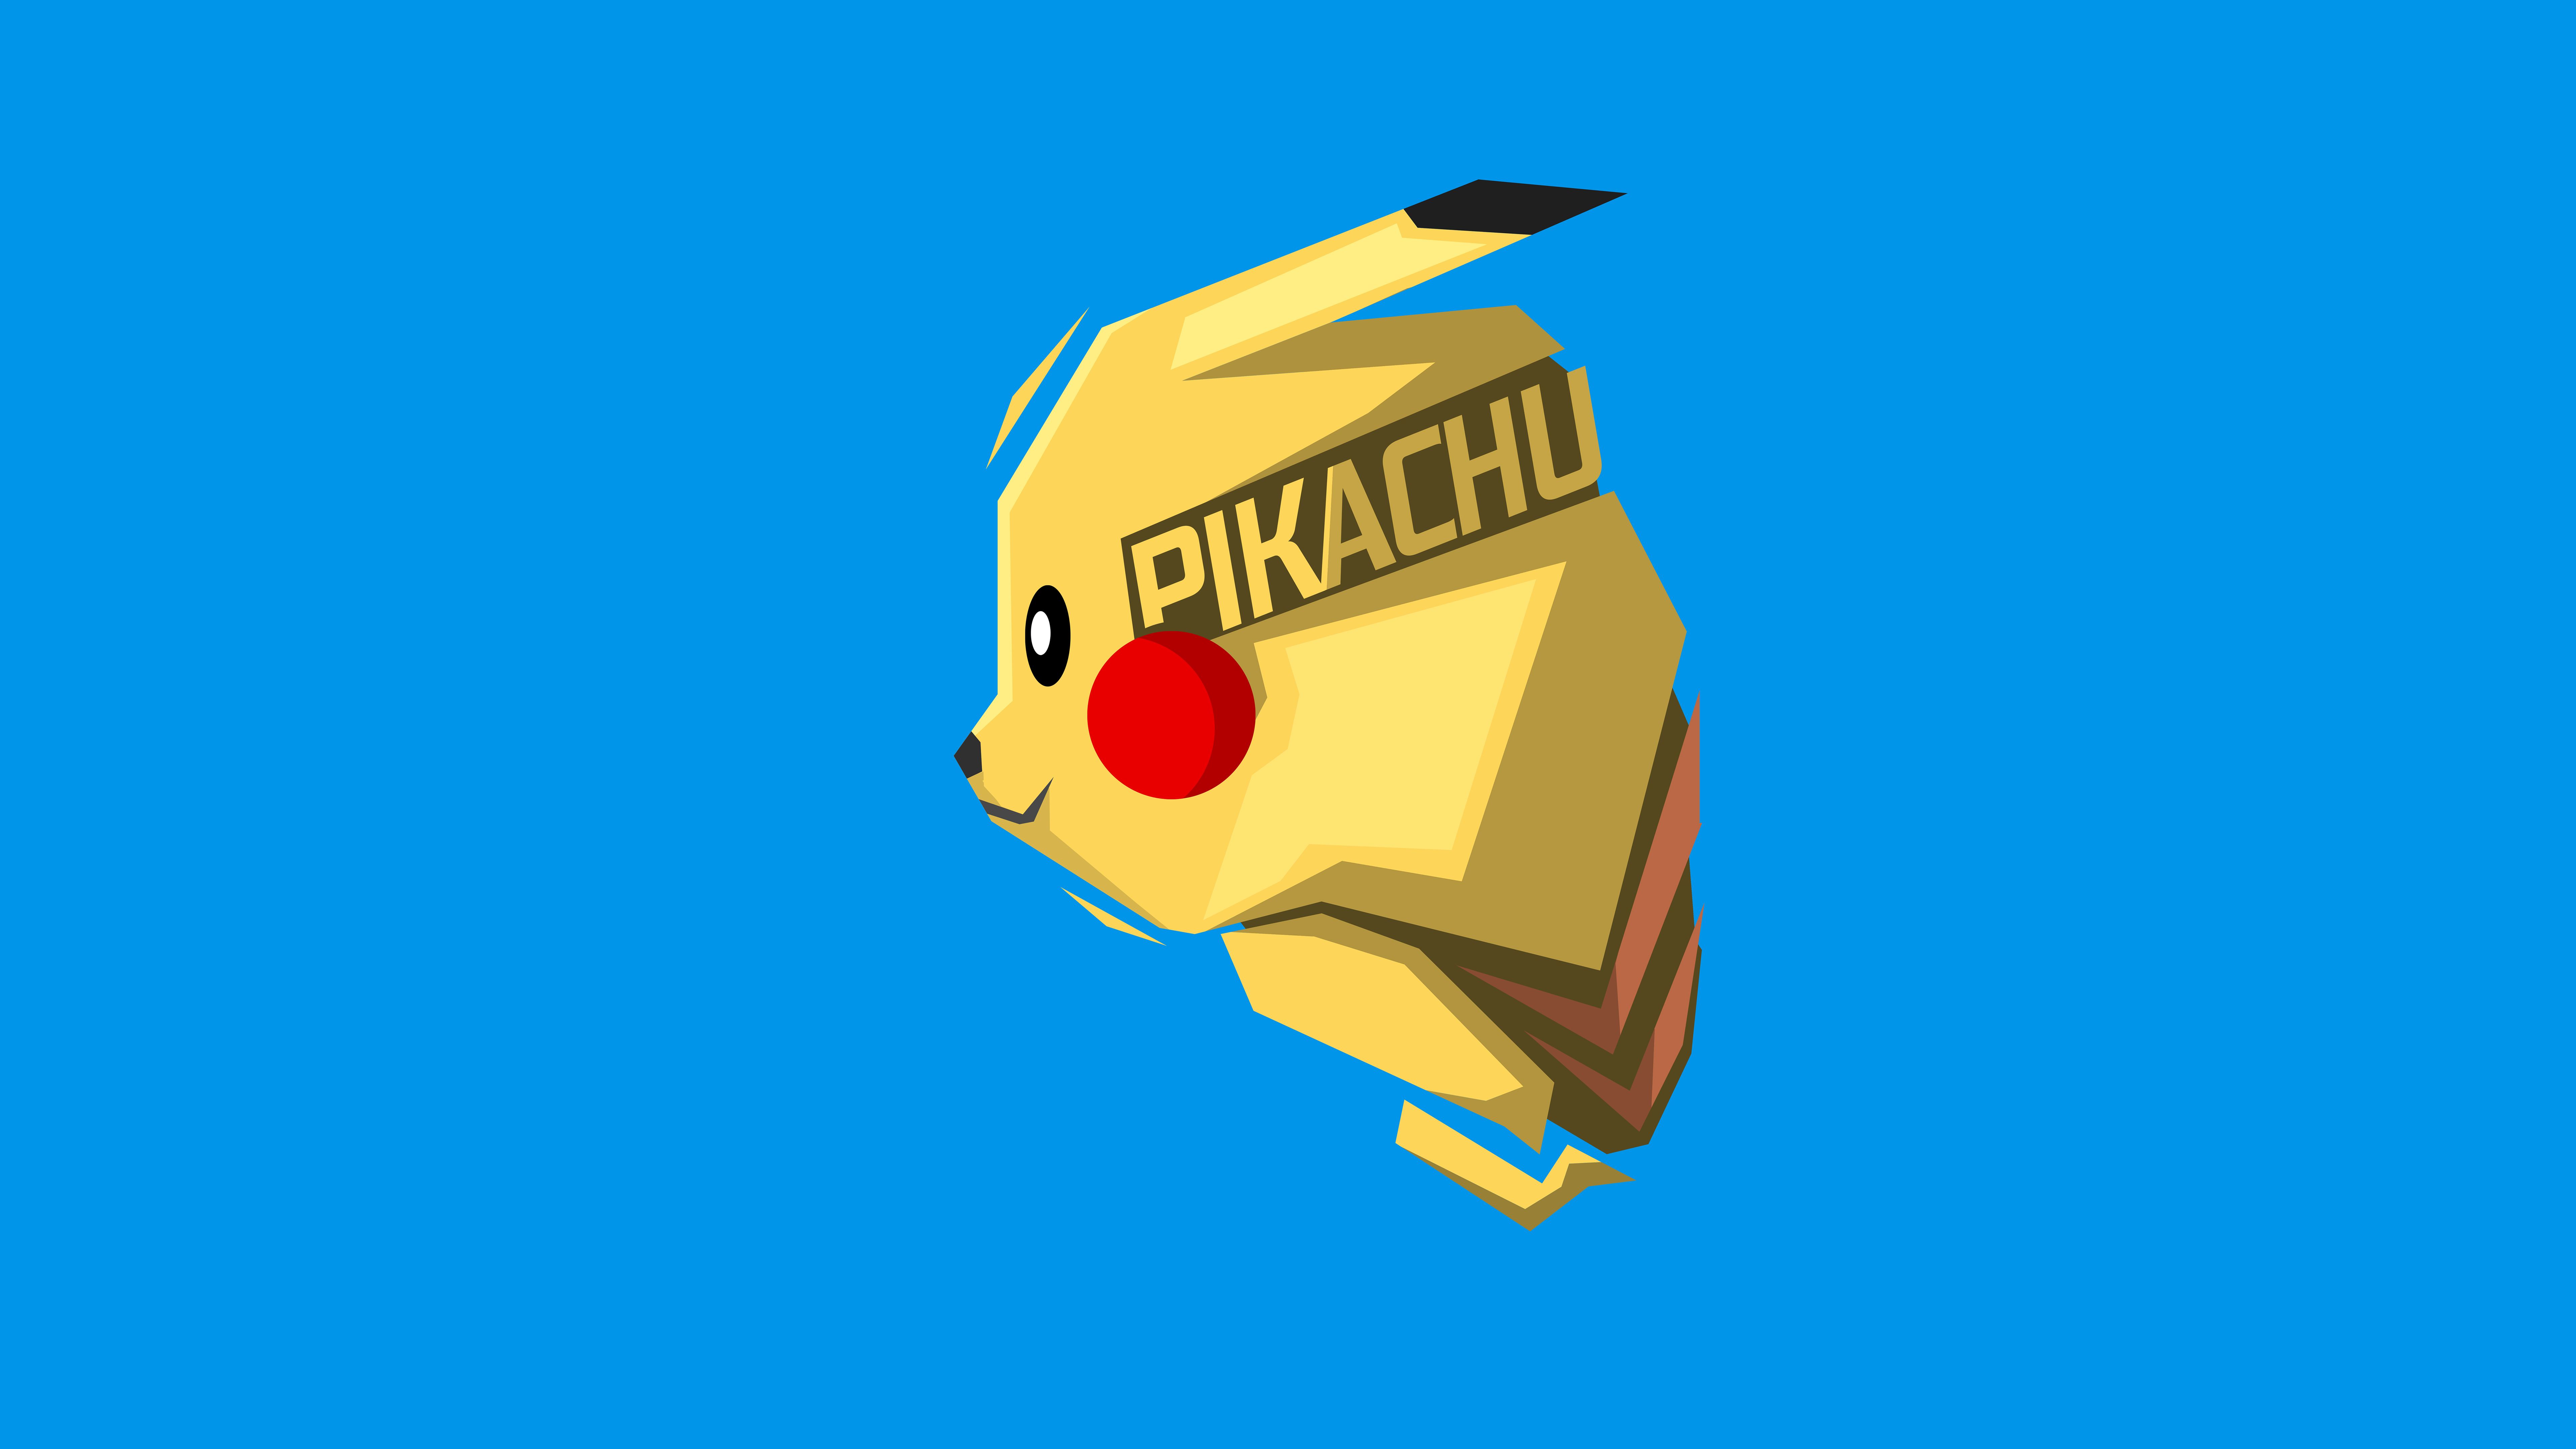 Wallpaper Pikachu, Minimal art, 4K, 8K, Minimal,. Wallpaper for iPhone, Android, Mobile and Desktop